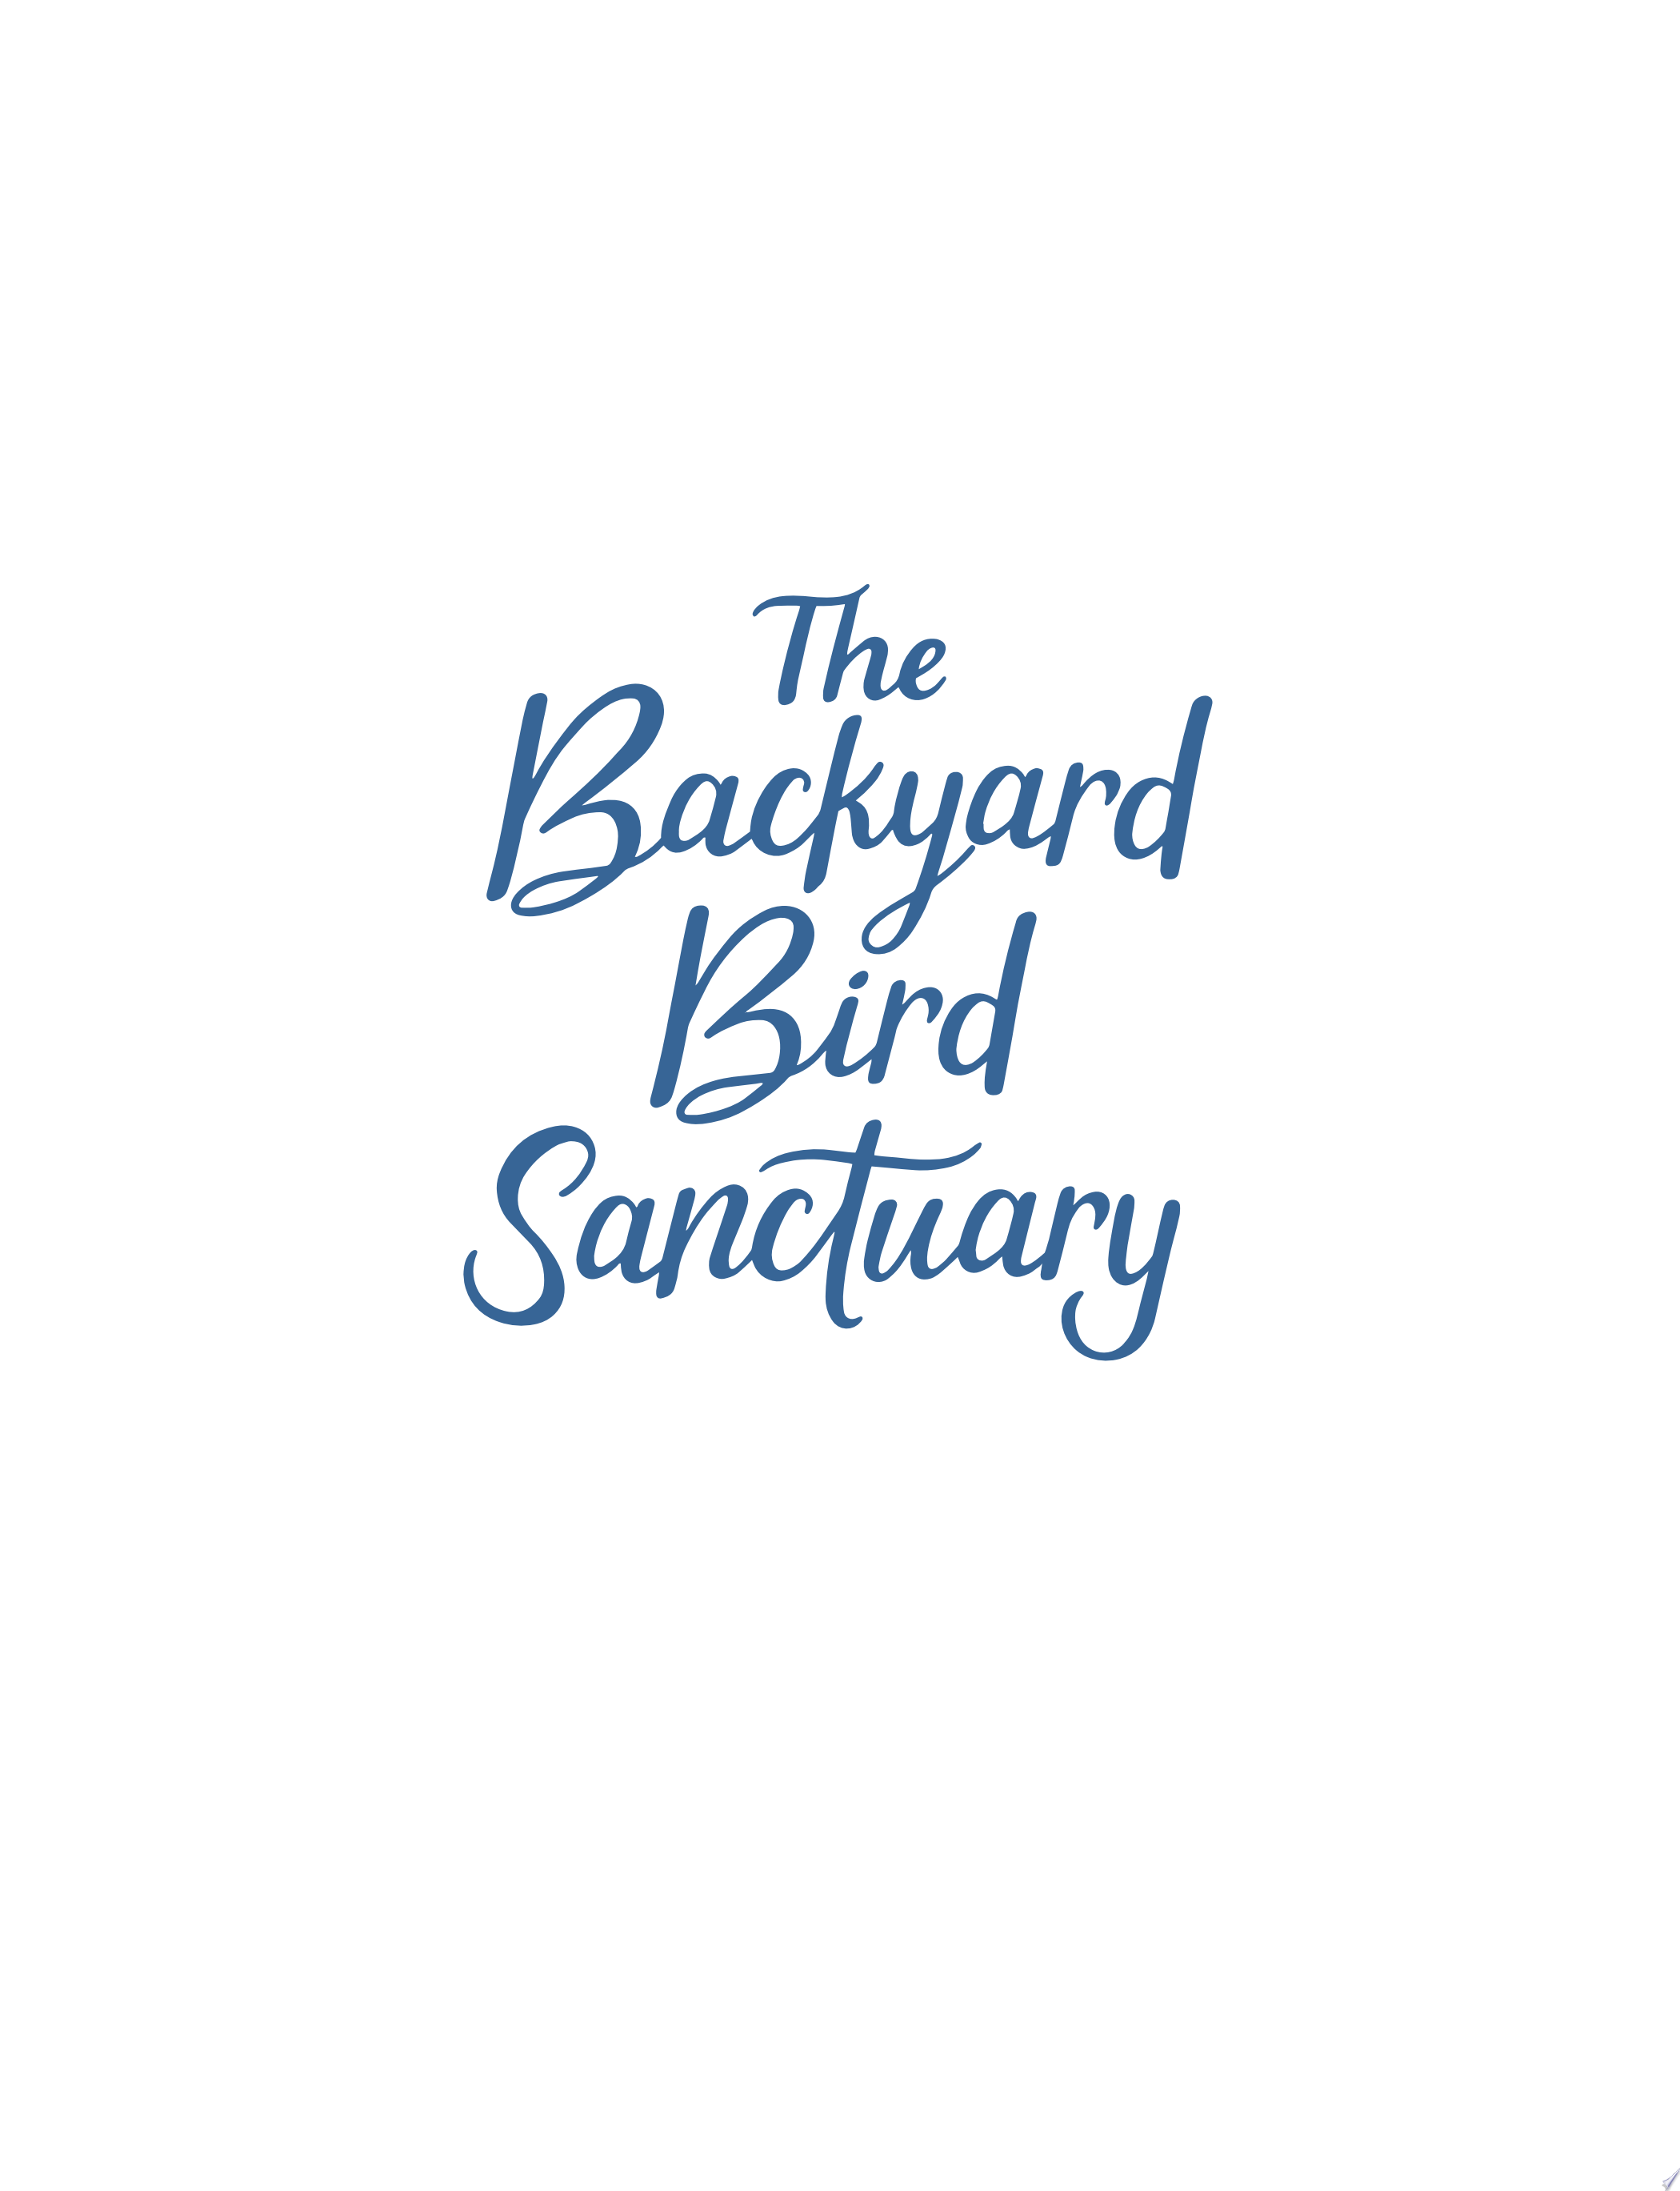 Image for "The Backyard Bird Sanctuary"